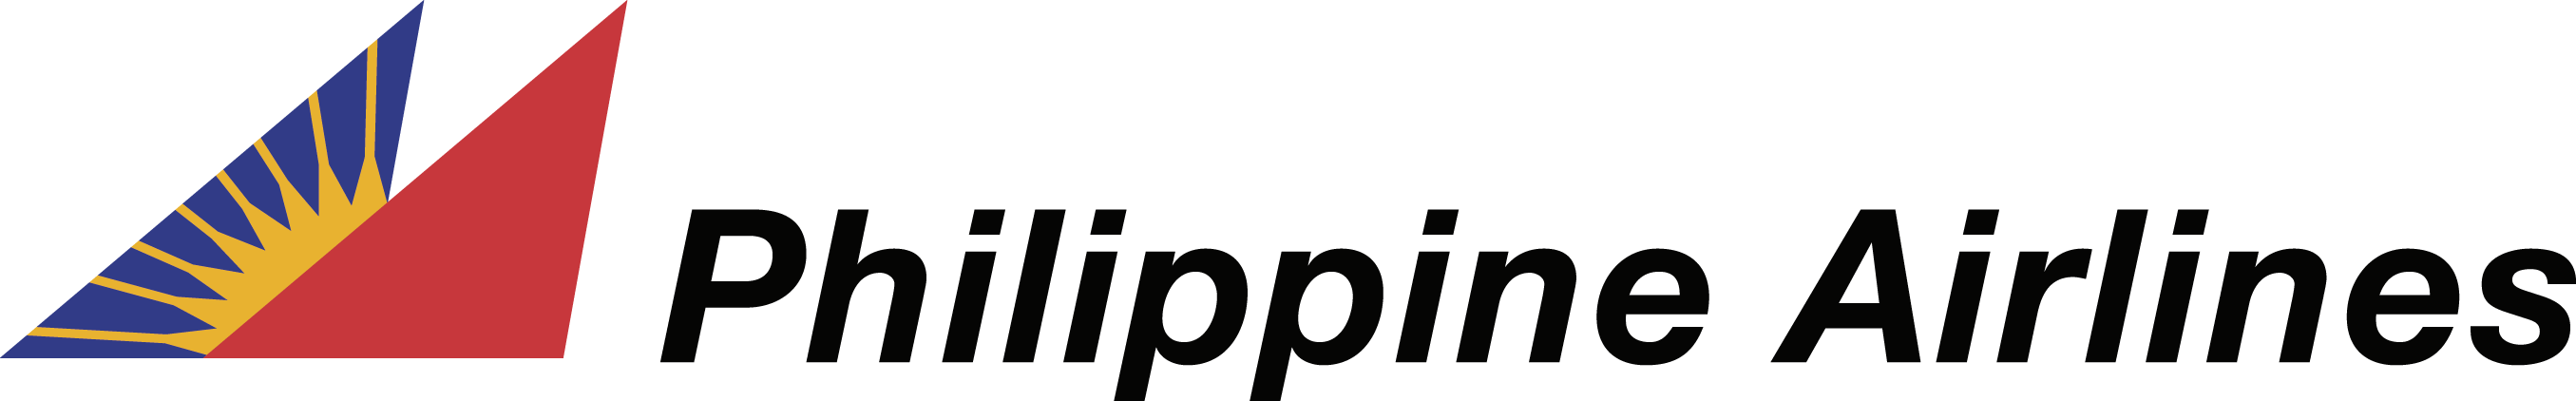 Philippine Airlines logo - download.